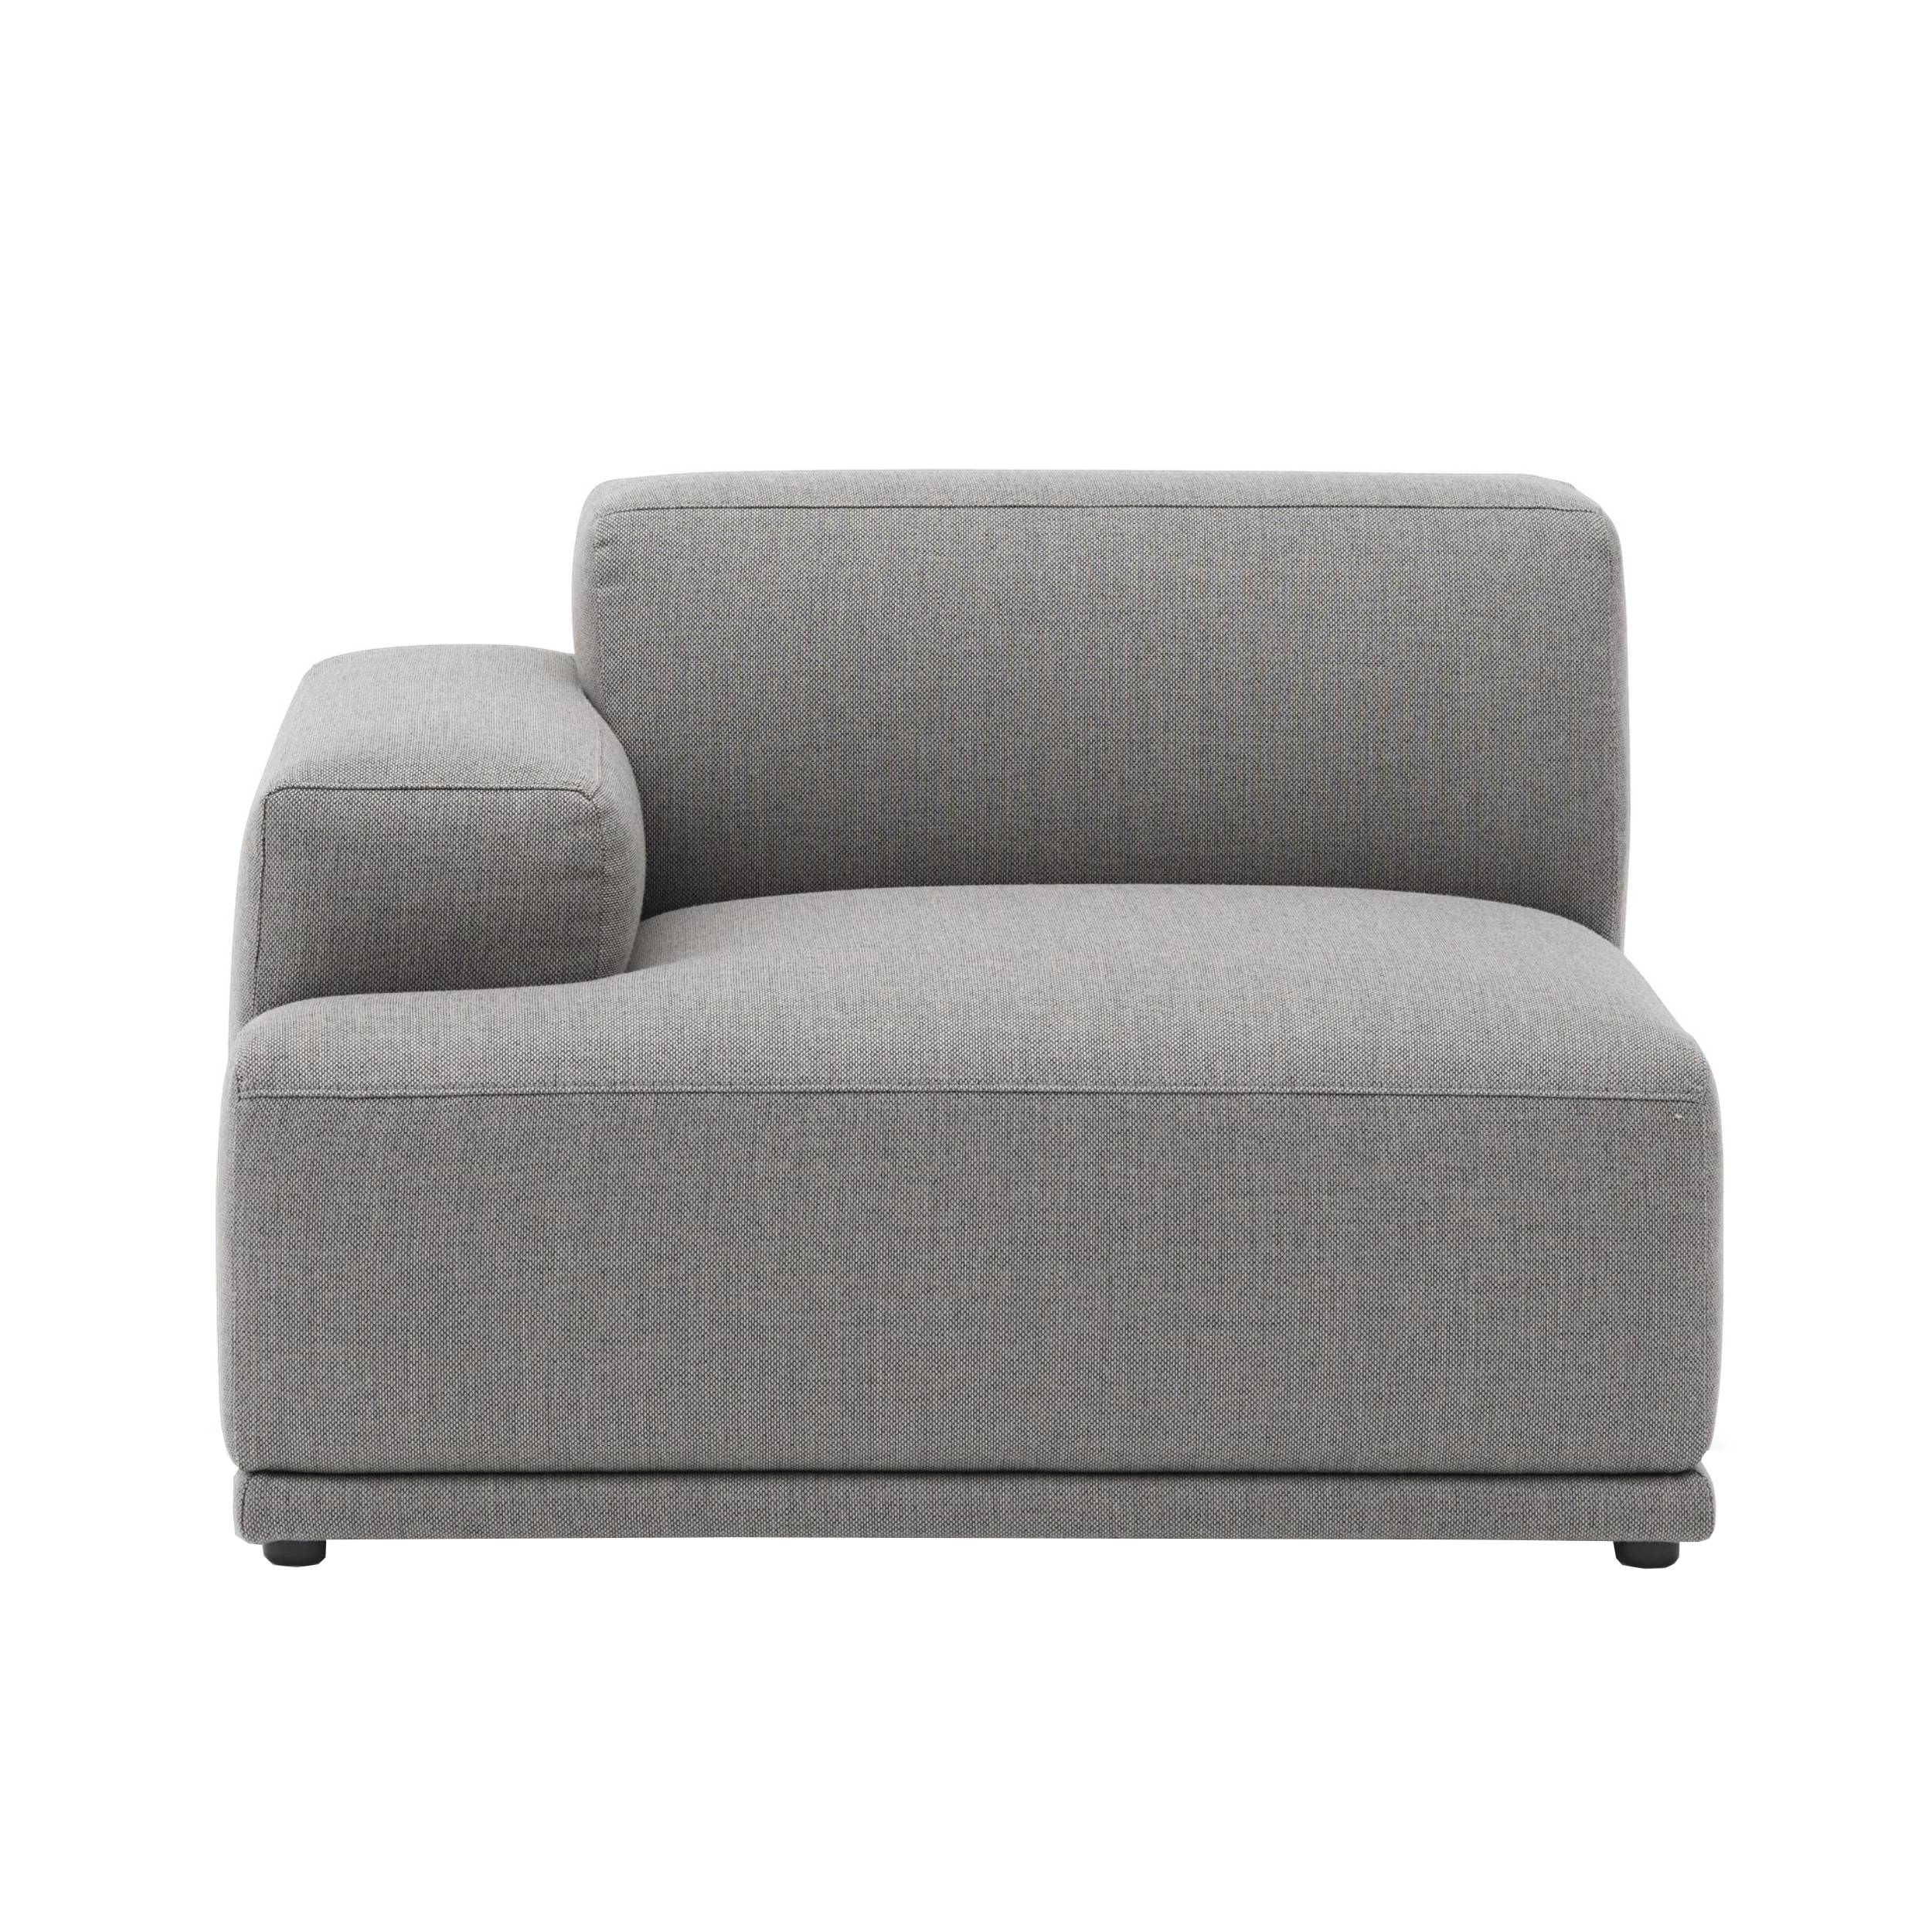 Connect Modular Sofa Pieces: A - Left Armrest